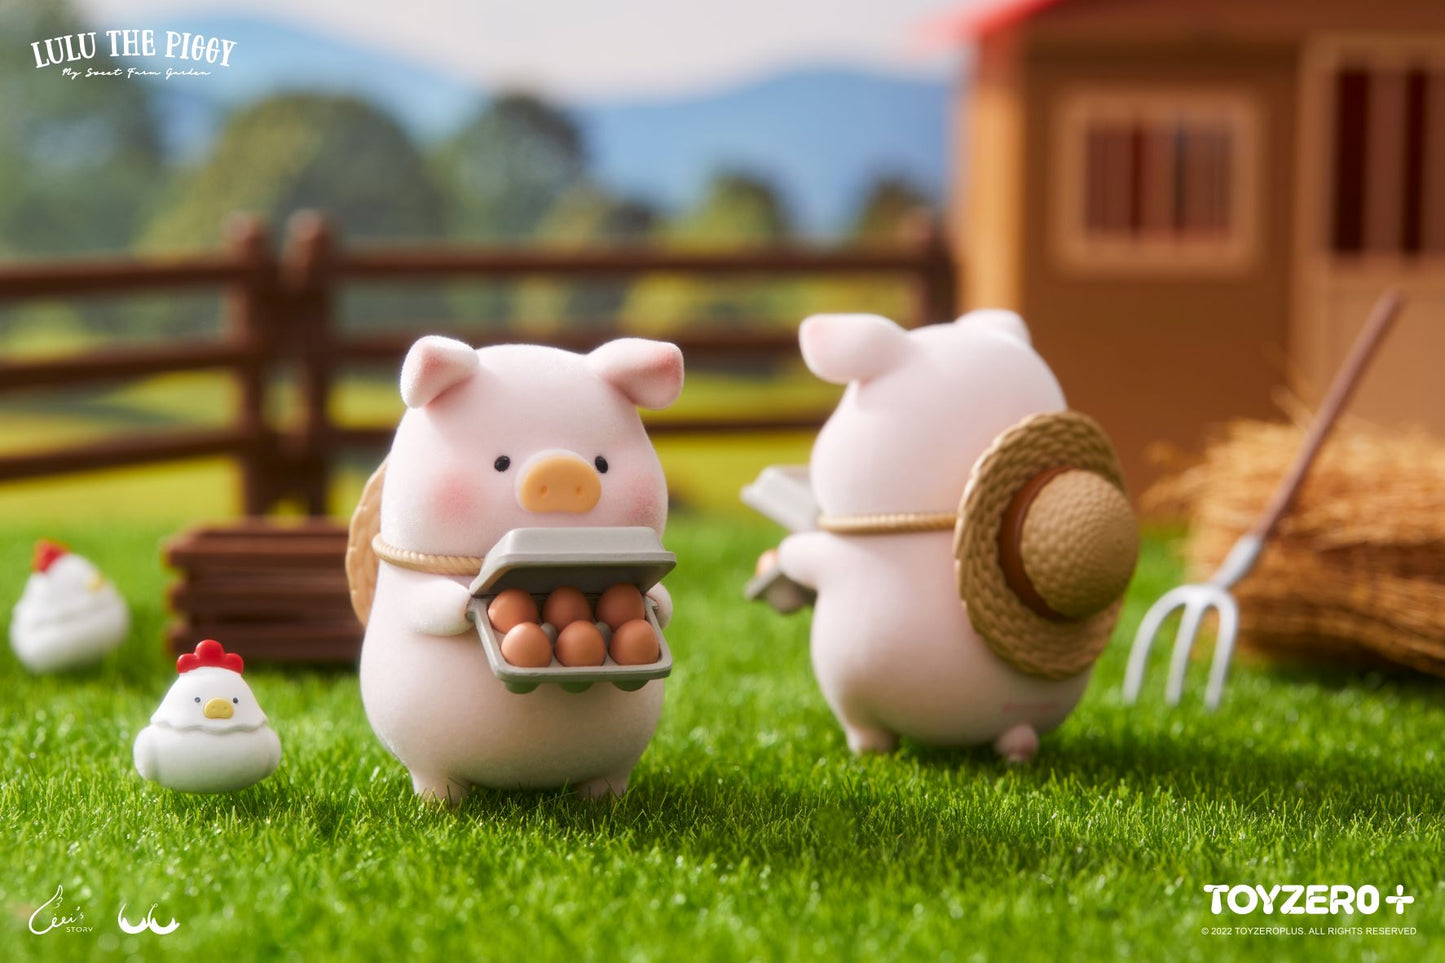 Lulu the Piggy My Sweet Farm Garden Series Blind Box by Toyzeroplus